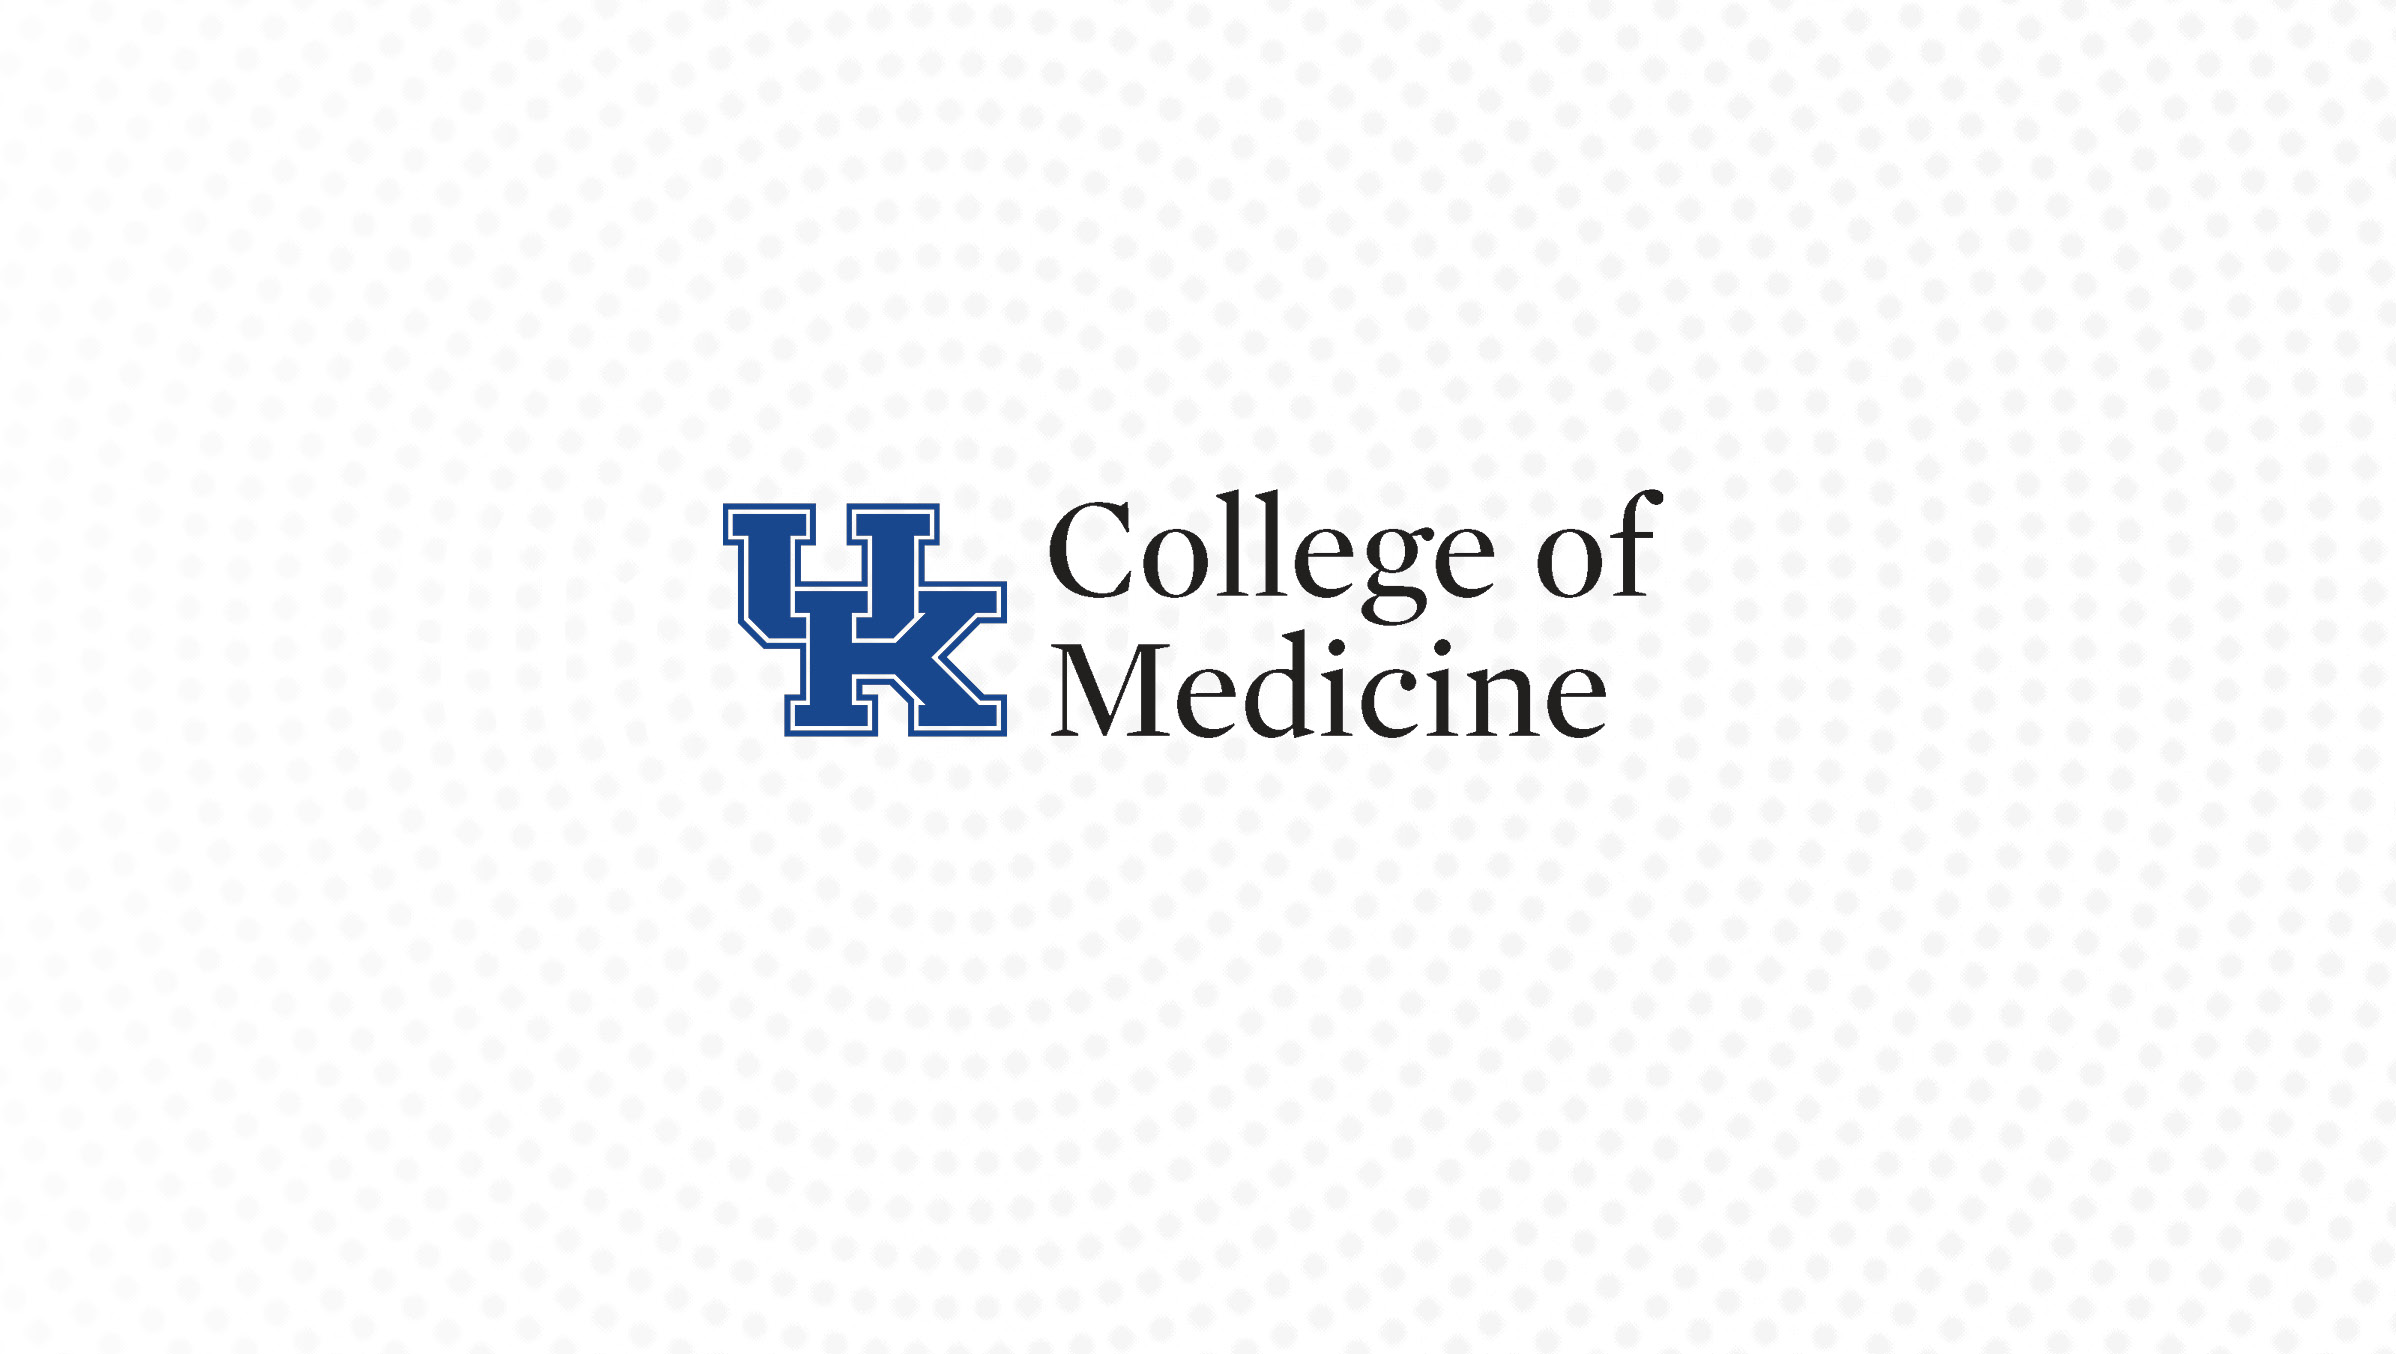 College of medicine logo over white background